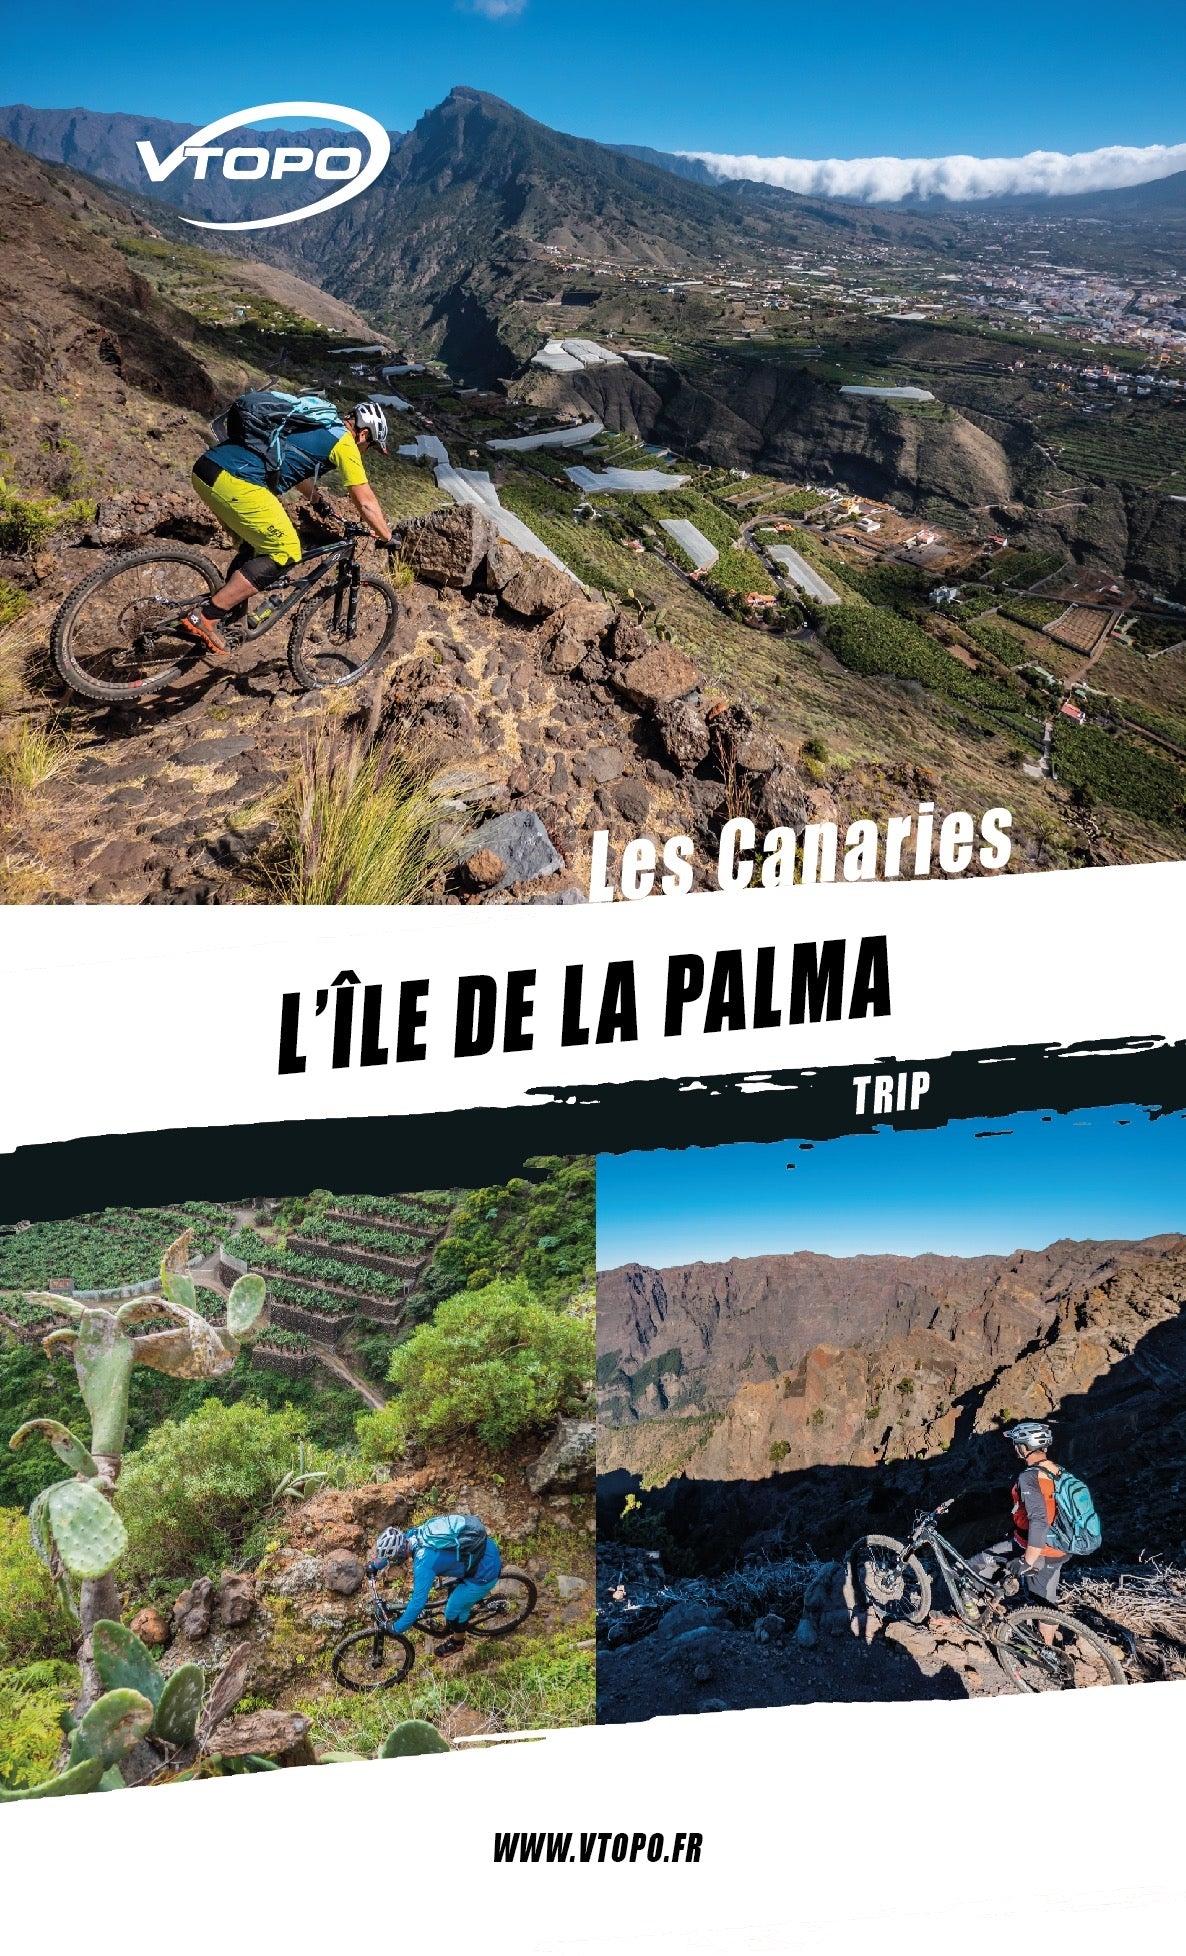 VTOPO VTT Trip La Palma Les Canaries - Livre Numérique